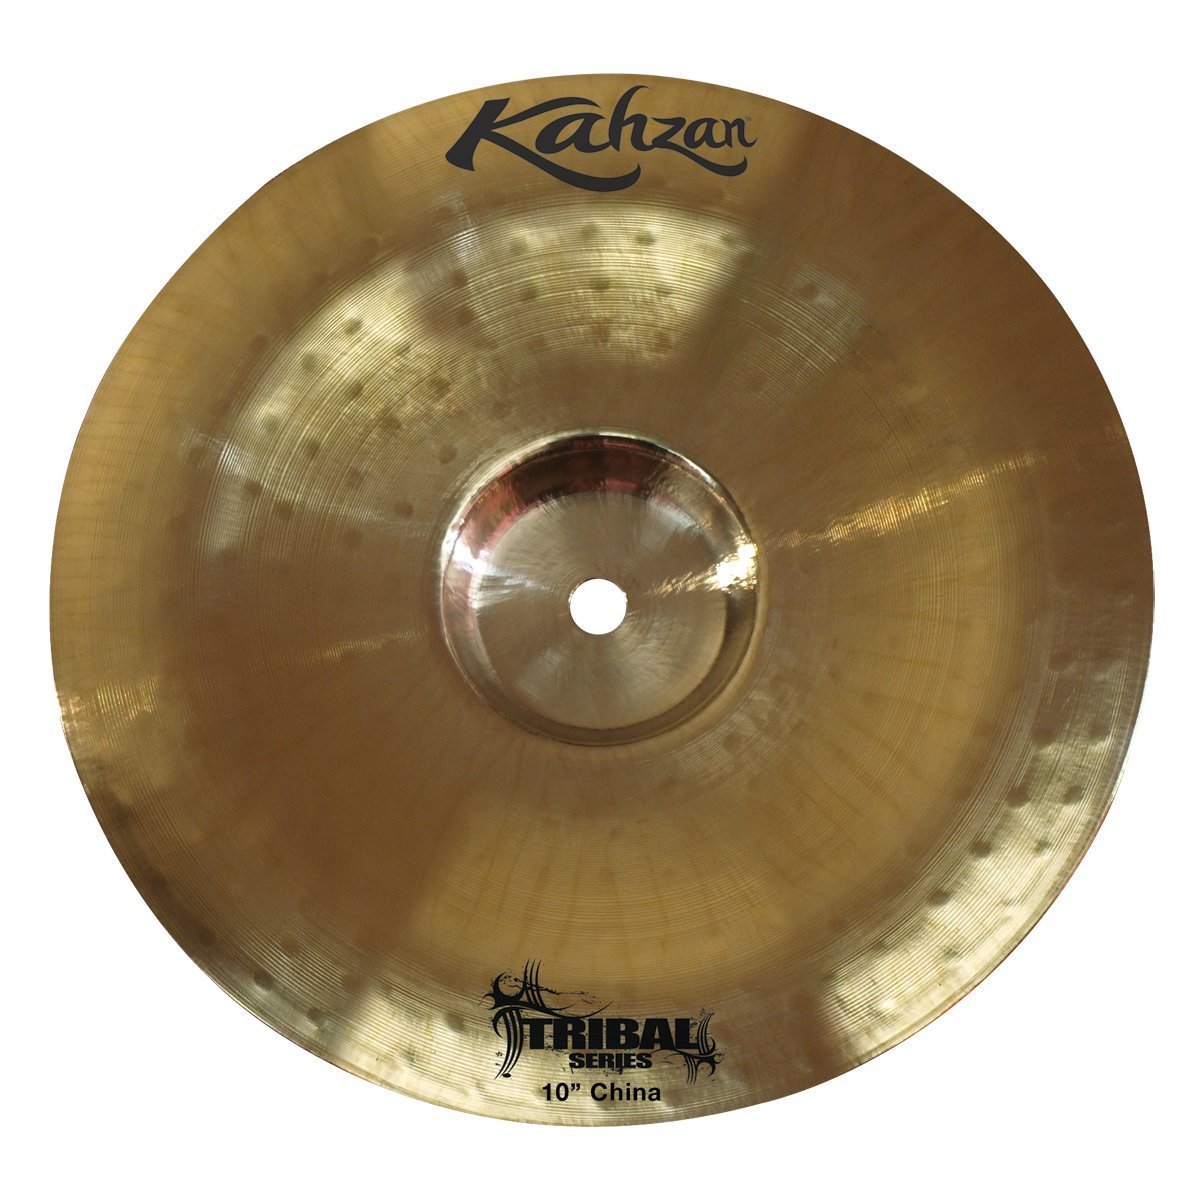 Kahzan 'Tribal Series' China Cymbal (10")